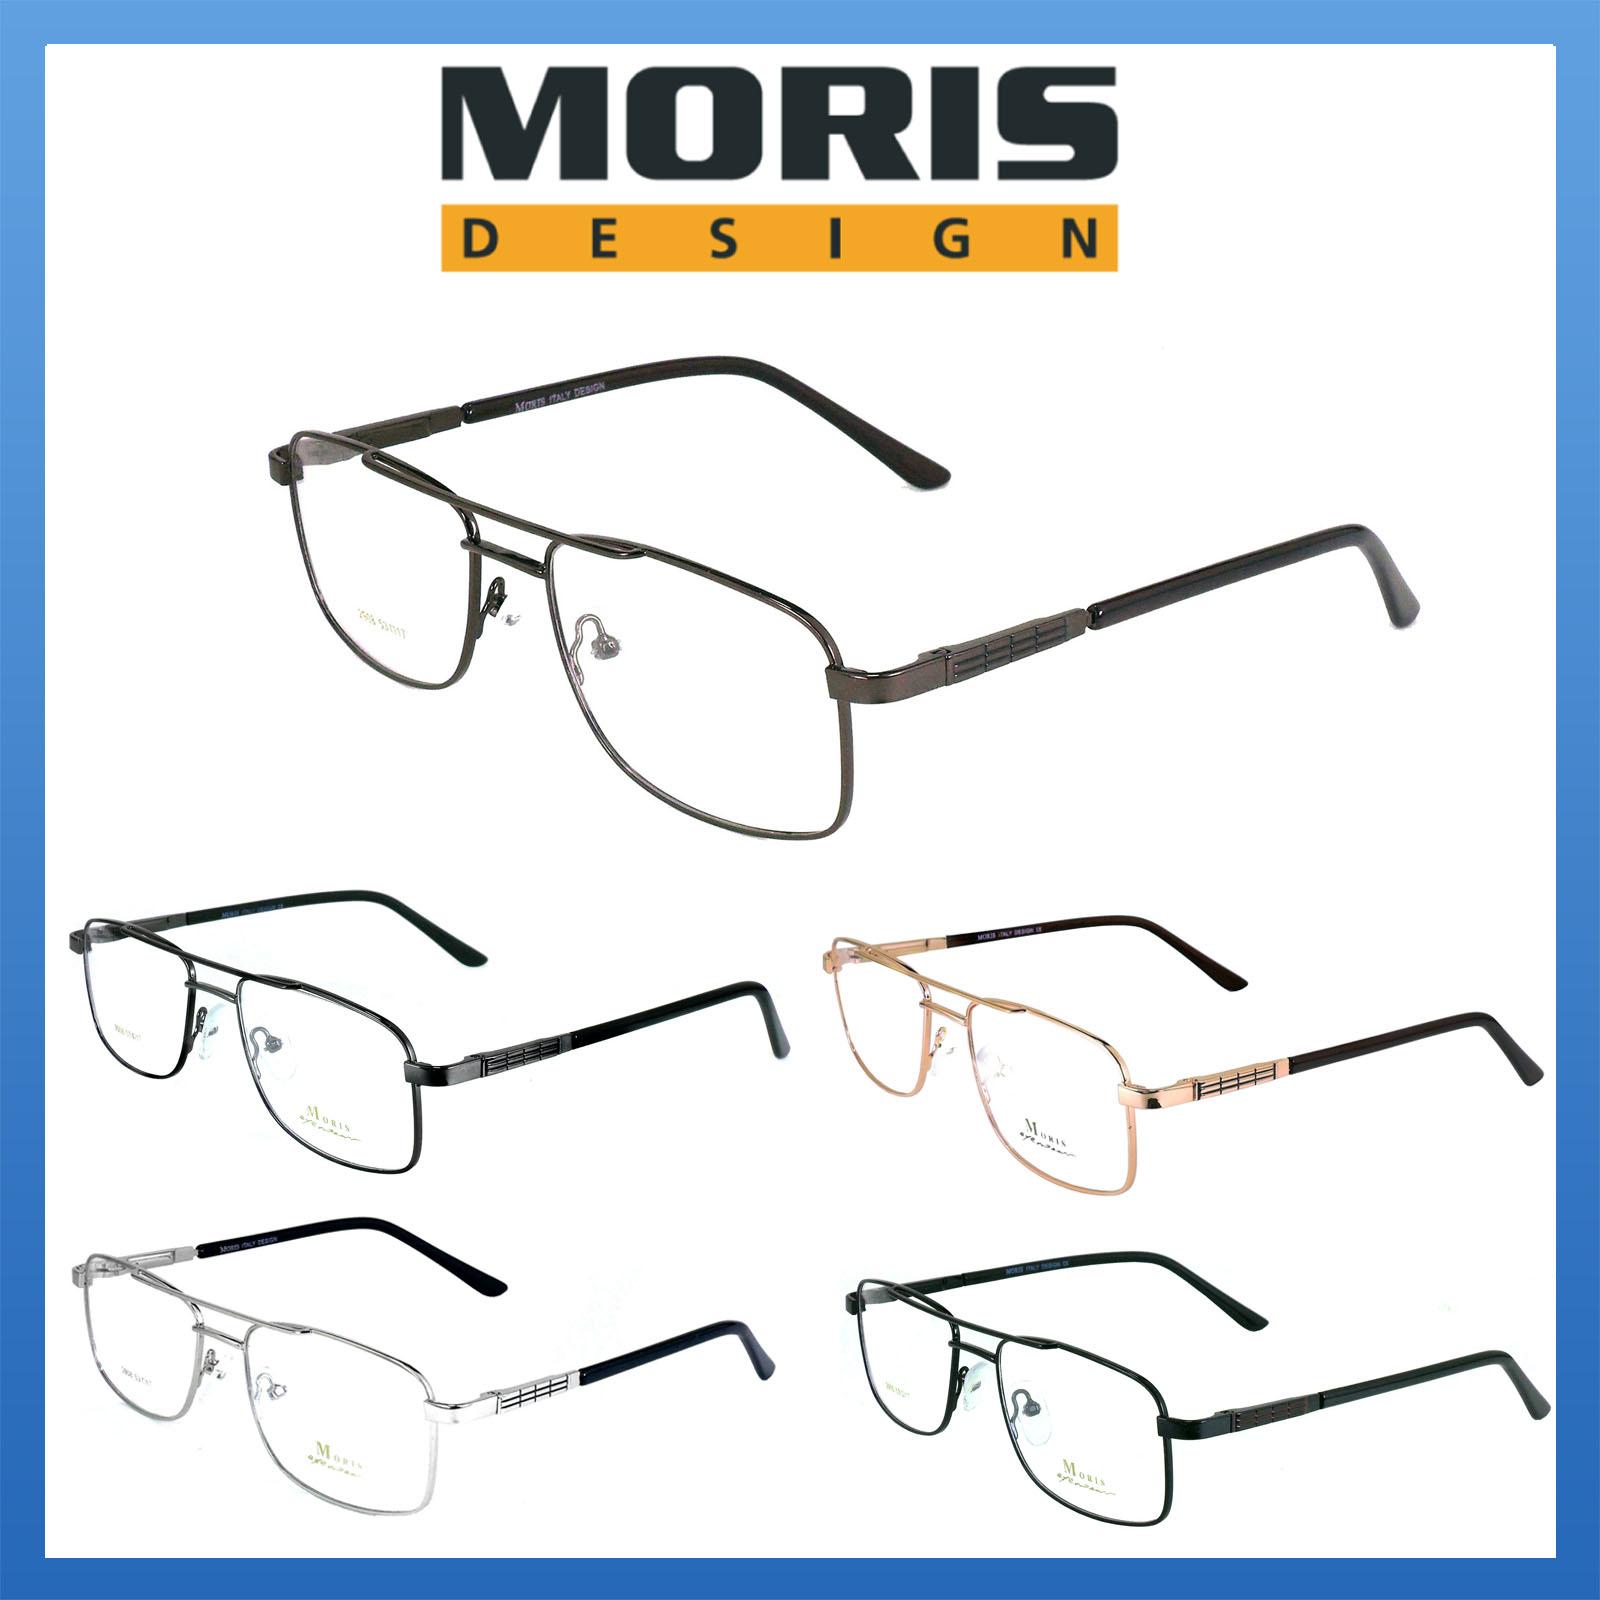 Moris แว่นตา รุ่น 2908 กรอบเต็ม Square ทรงสี่เหลี่ยม ขาสปริง วัสดุ สแตนเลส สตีล (สำหรับตัดเลนส์) กรอบแว่นตา สวมใส่สบาย น้ำหนักเบา ไม่ตกเทรนด์ มีความแข็งแรงทนทาน Full frame Eyeglass Spring leg Stainless Steel material Eyewear Top Glasses